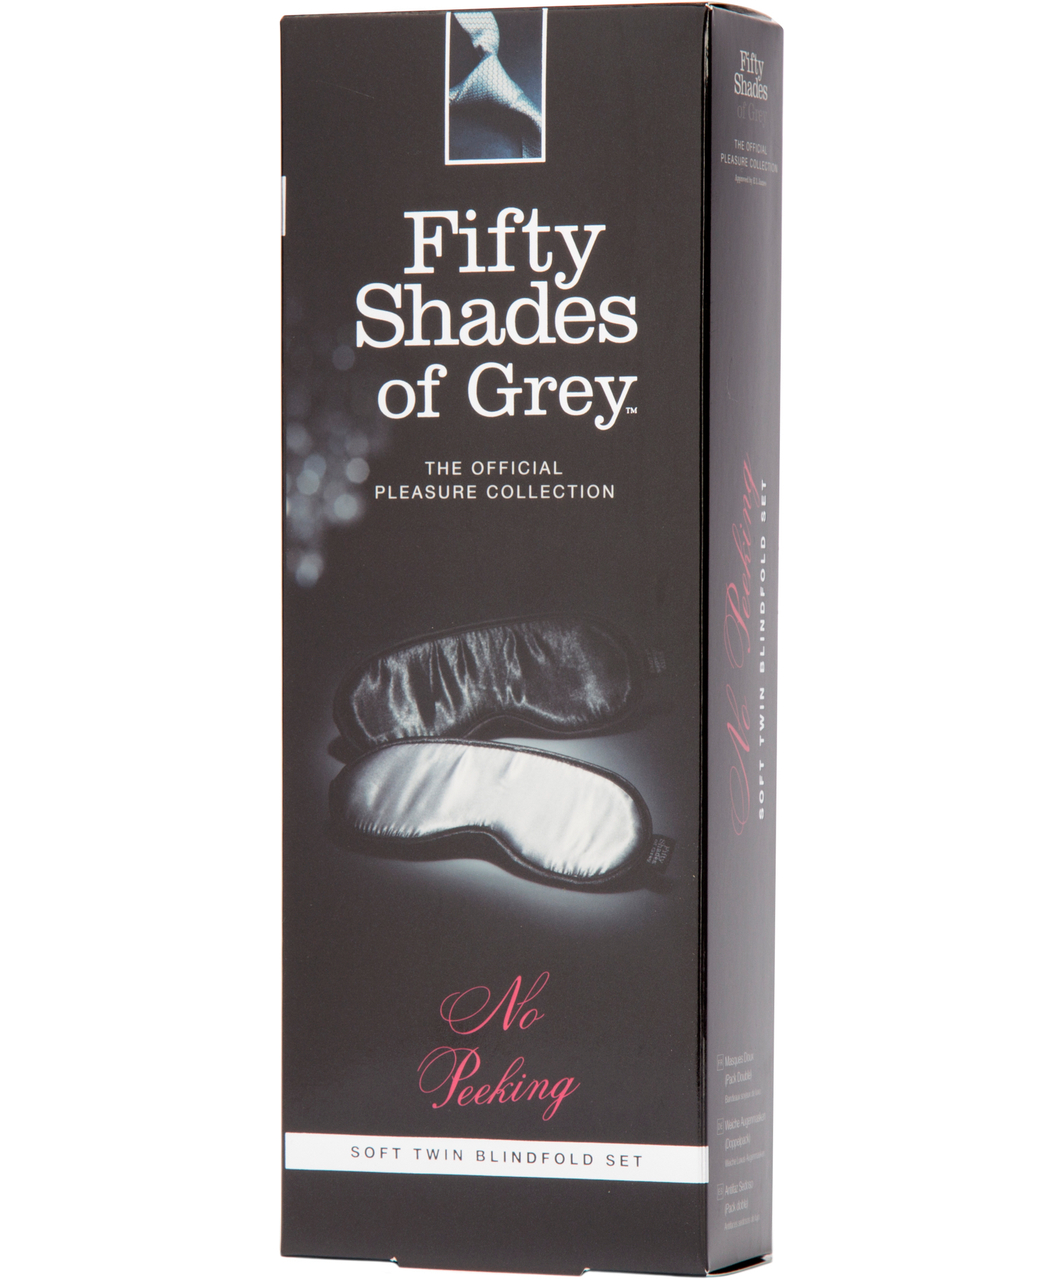 Fifty Shades of Grey No Peeking Soft Twin Blindfold Set